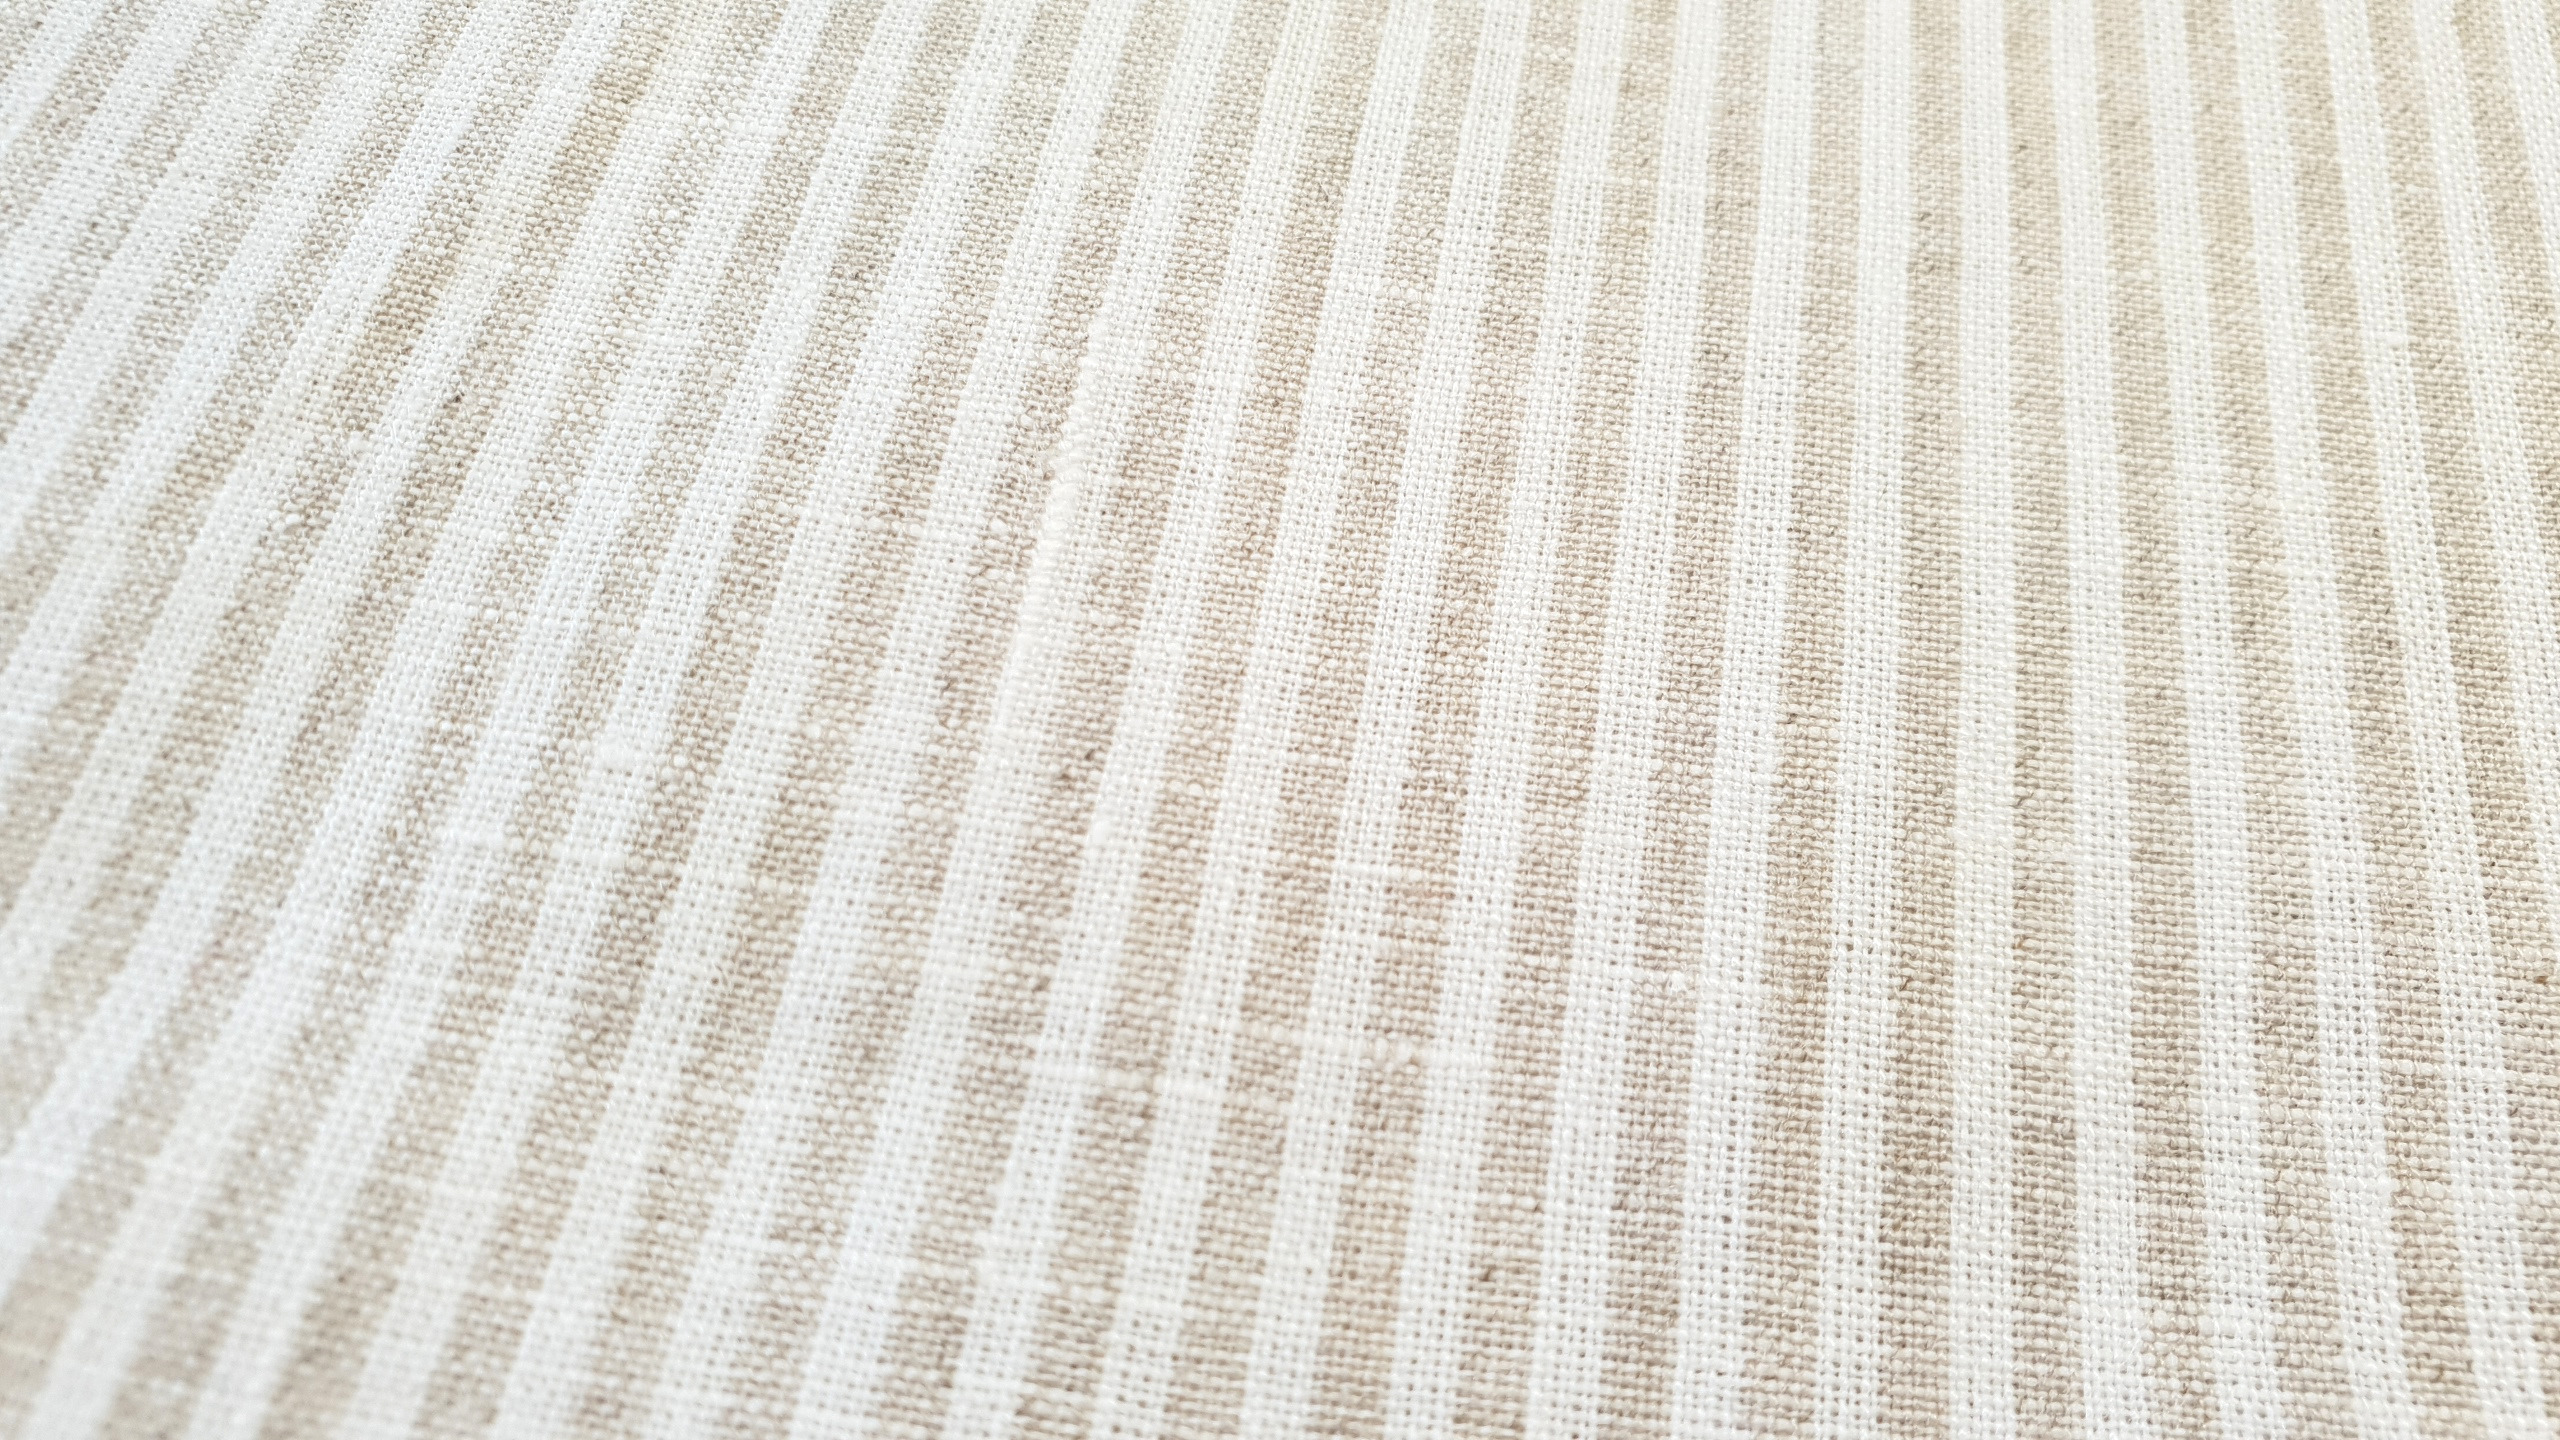 Striped linen- small natural white